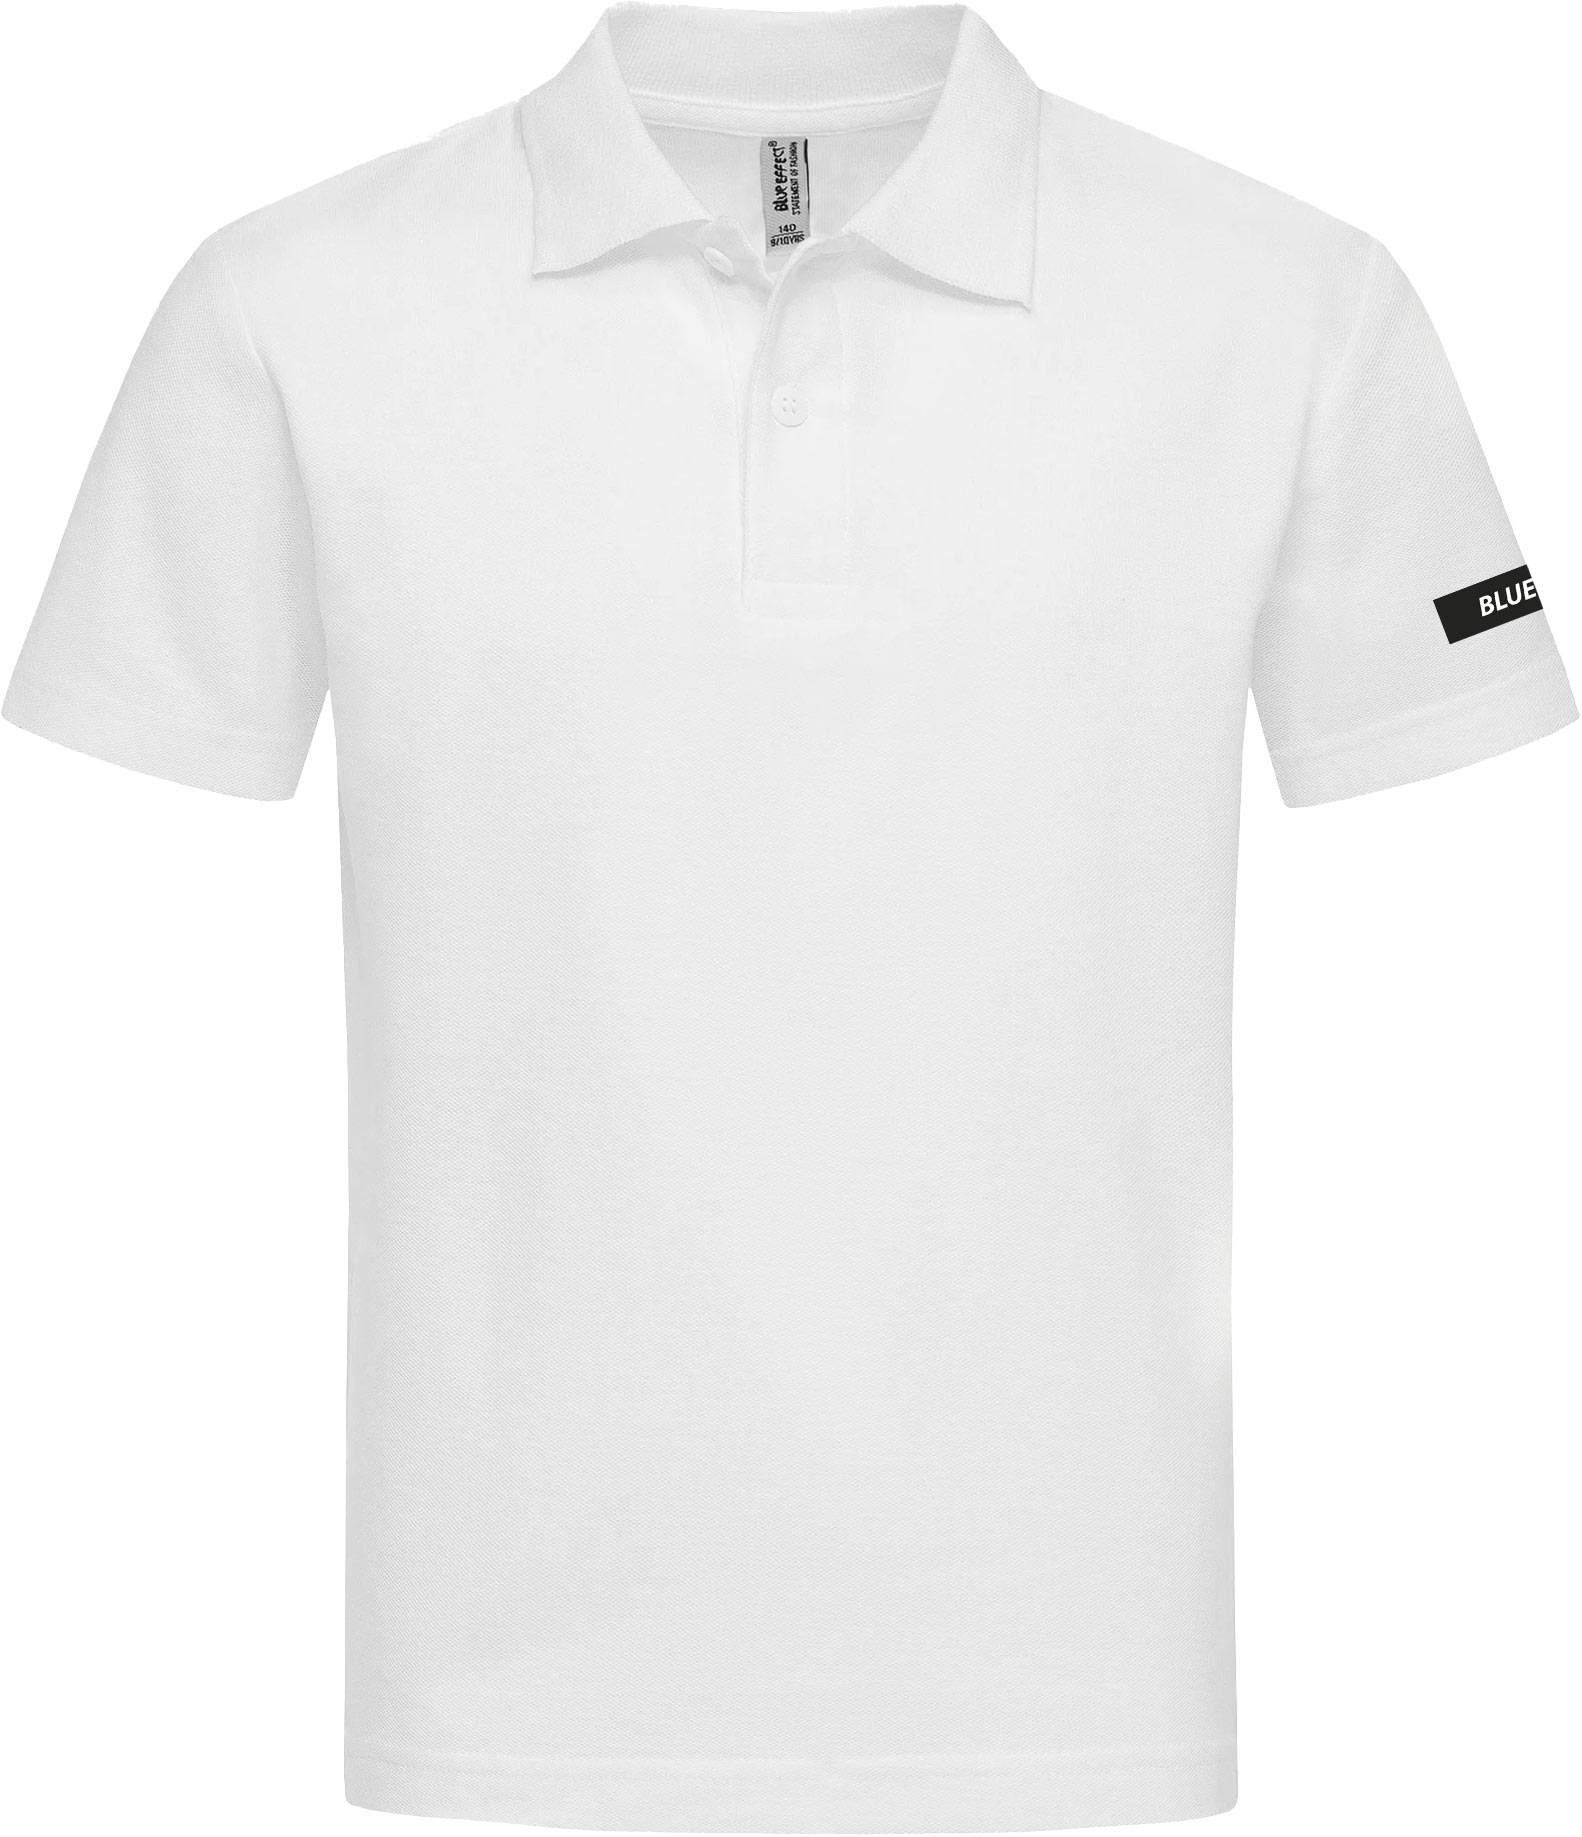 6321-Boys Polo T-Shirt